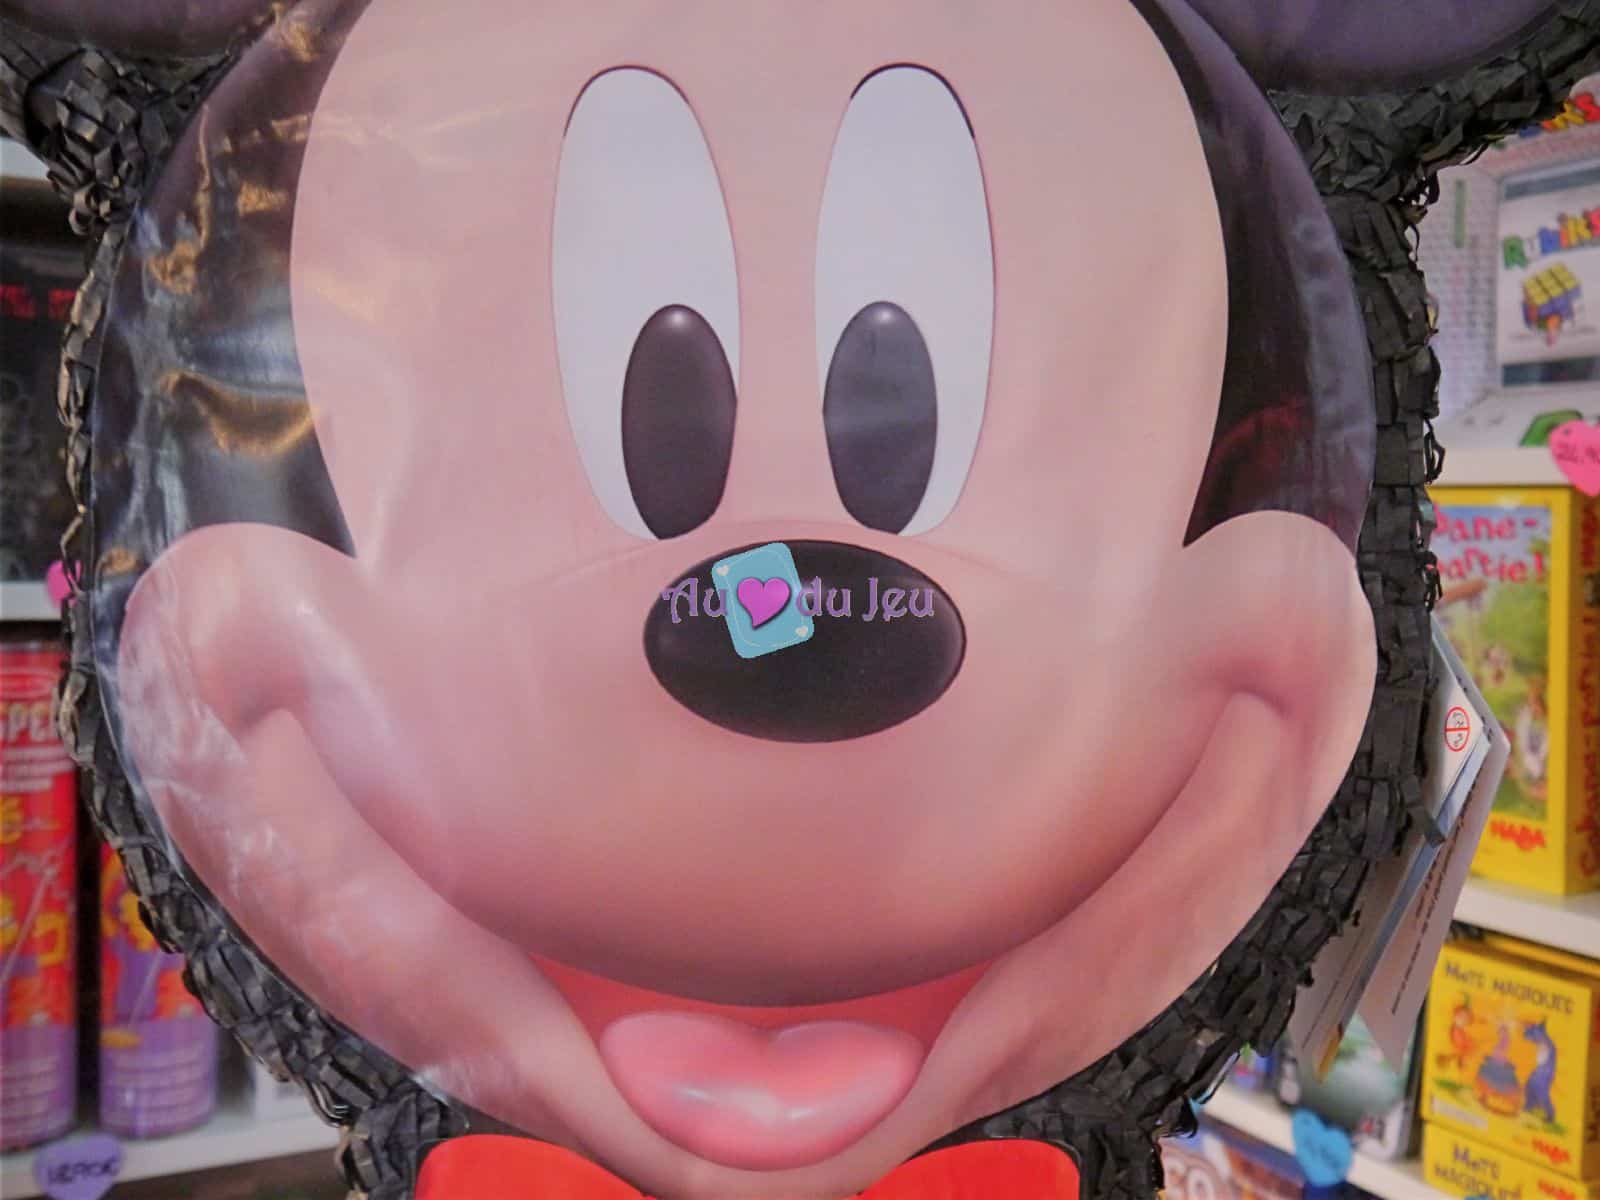 Piñata Mickey